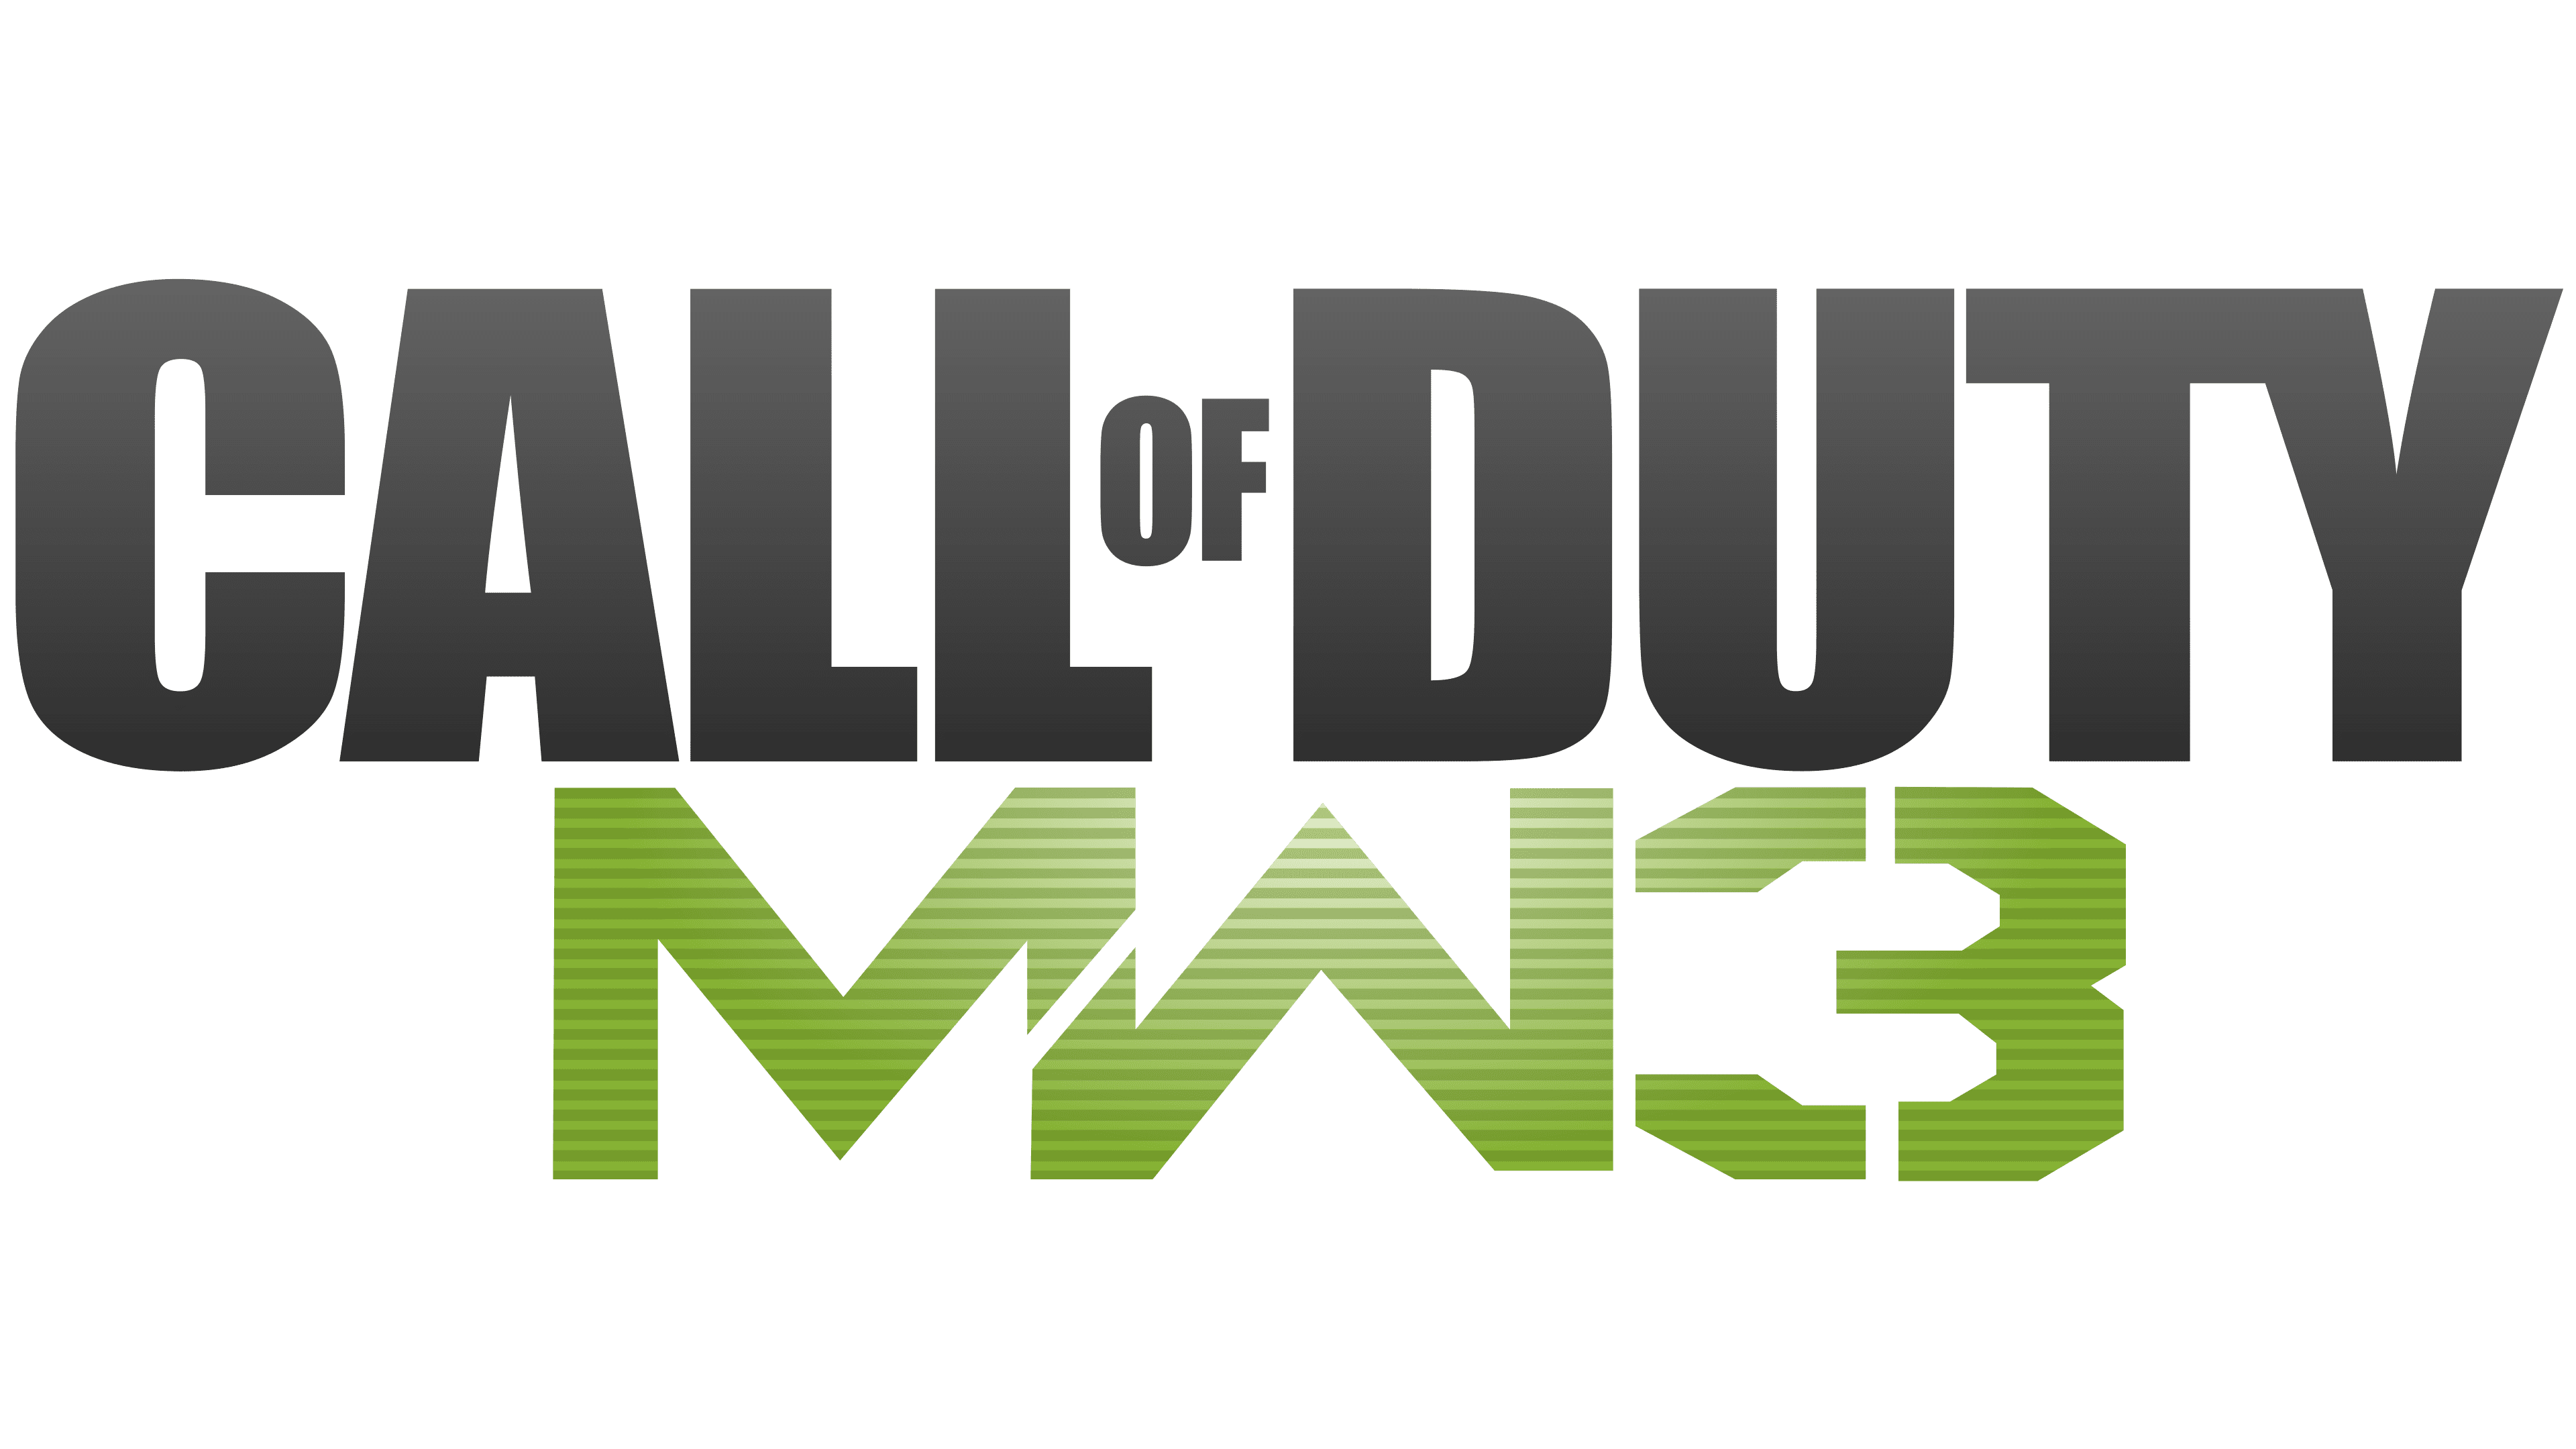 Call of Duty Advanced Warfare Logo